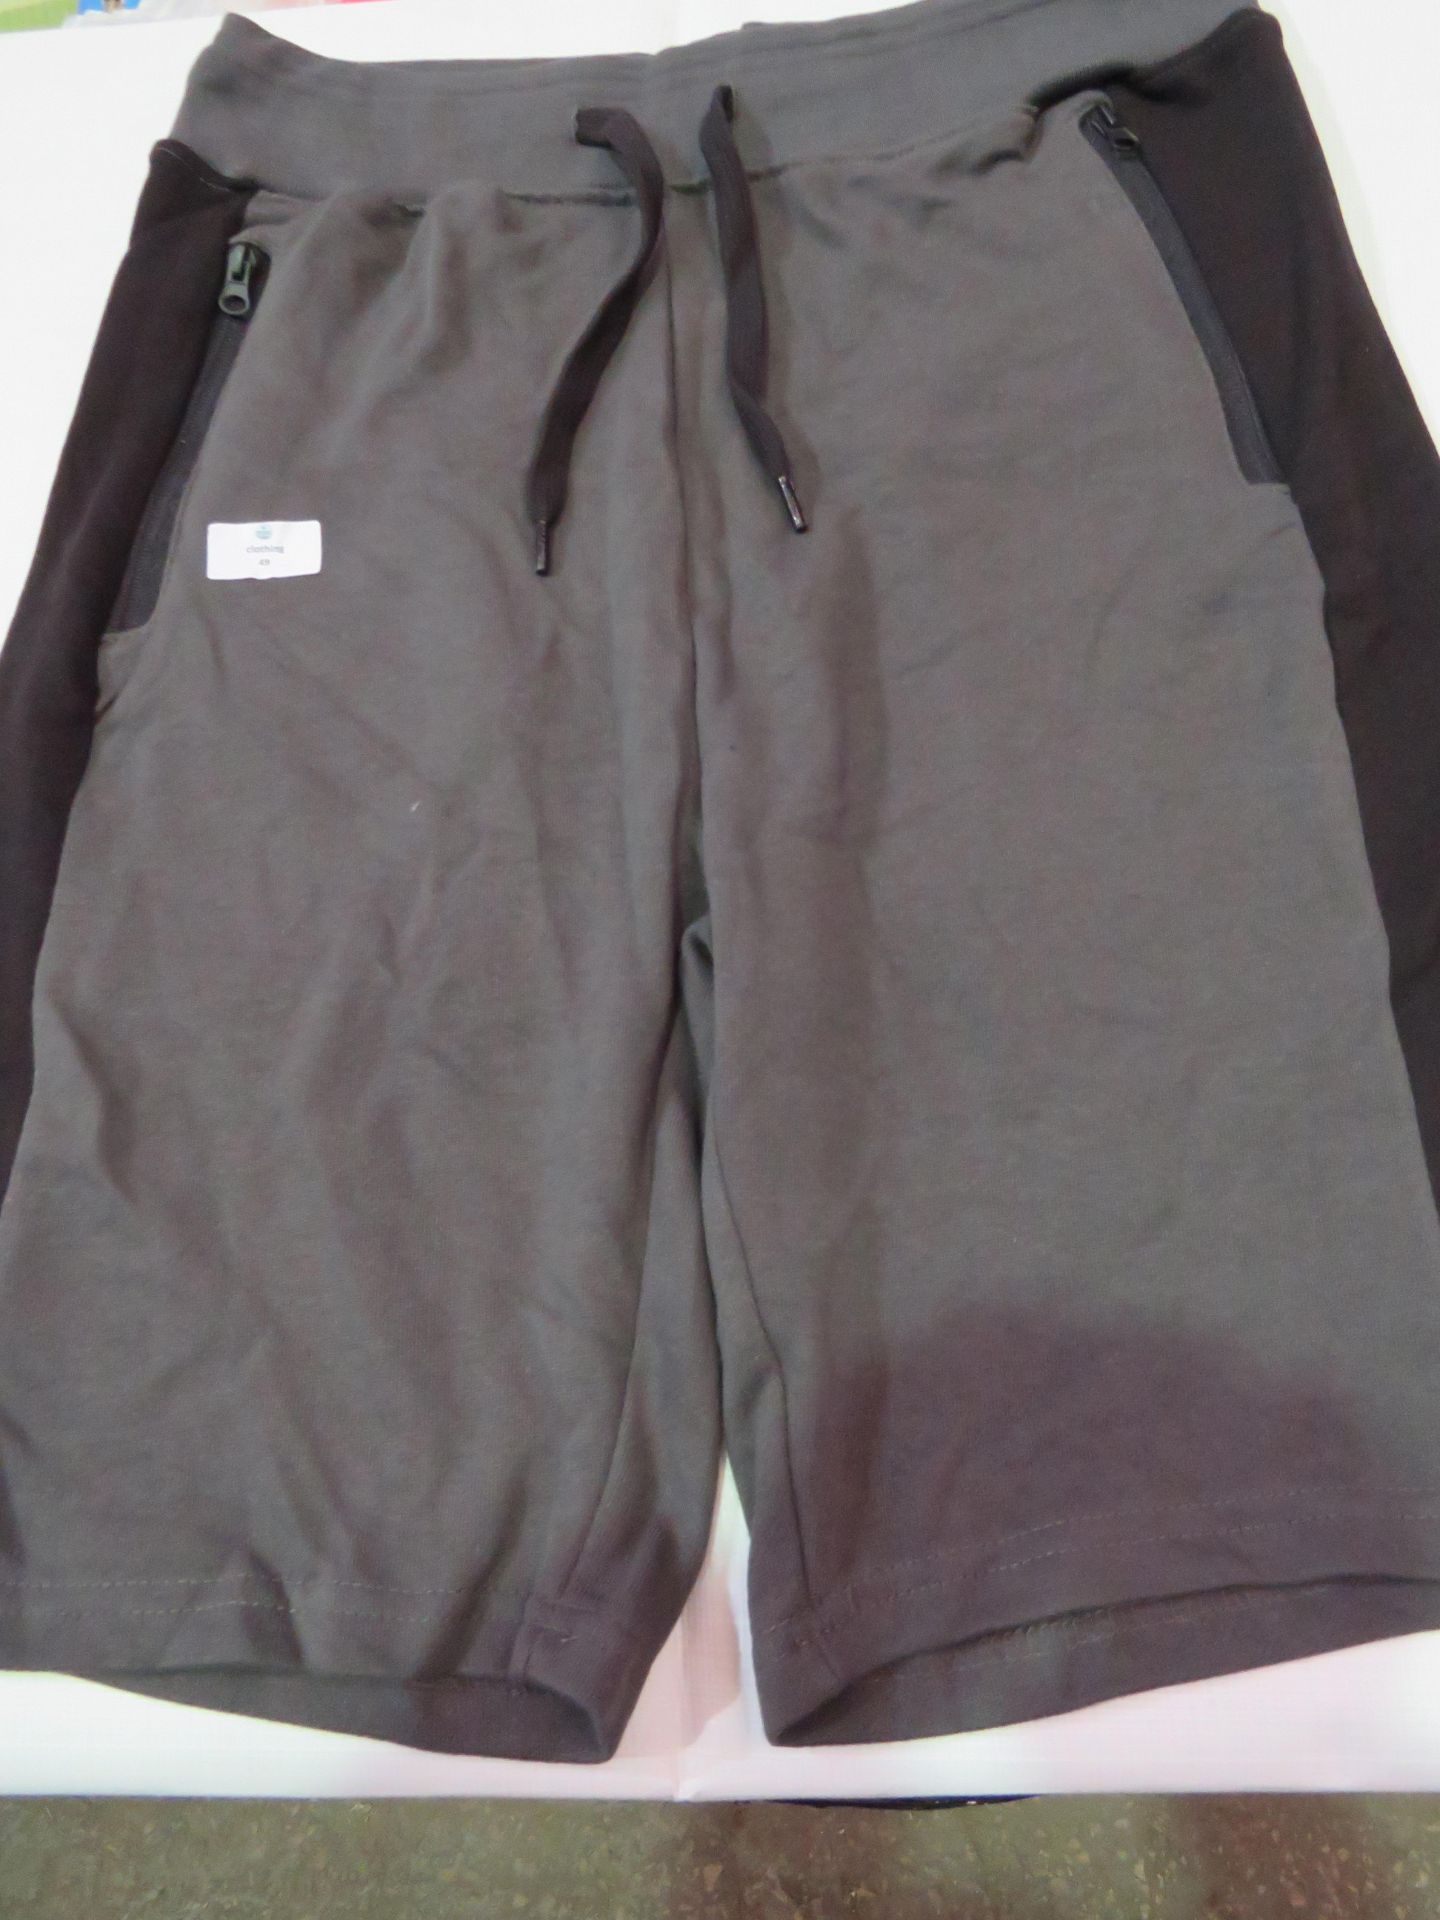 QBUK Shorts Black/Grey Size M New